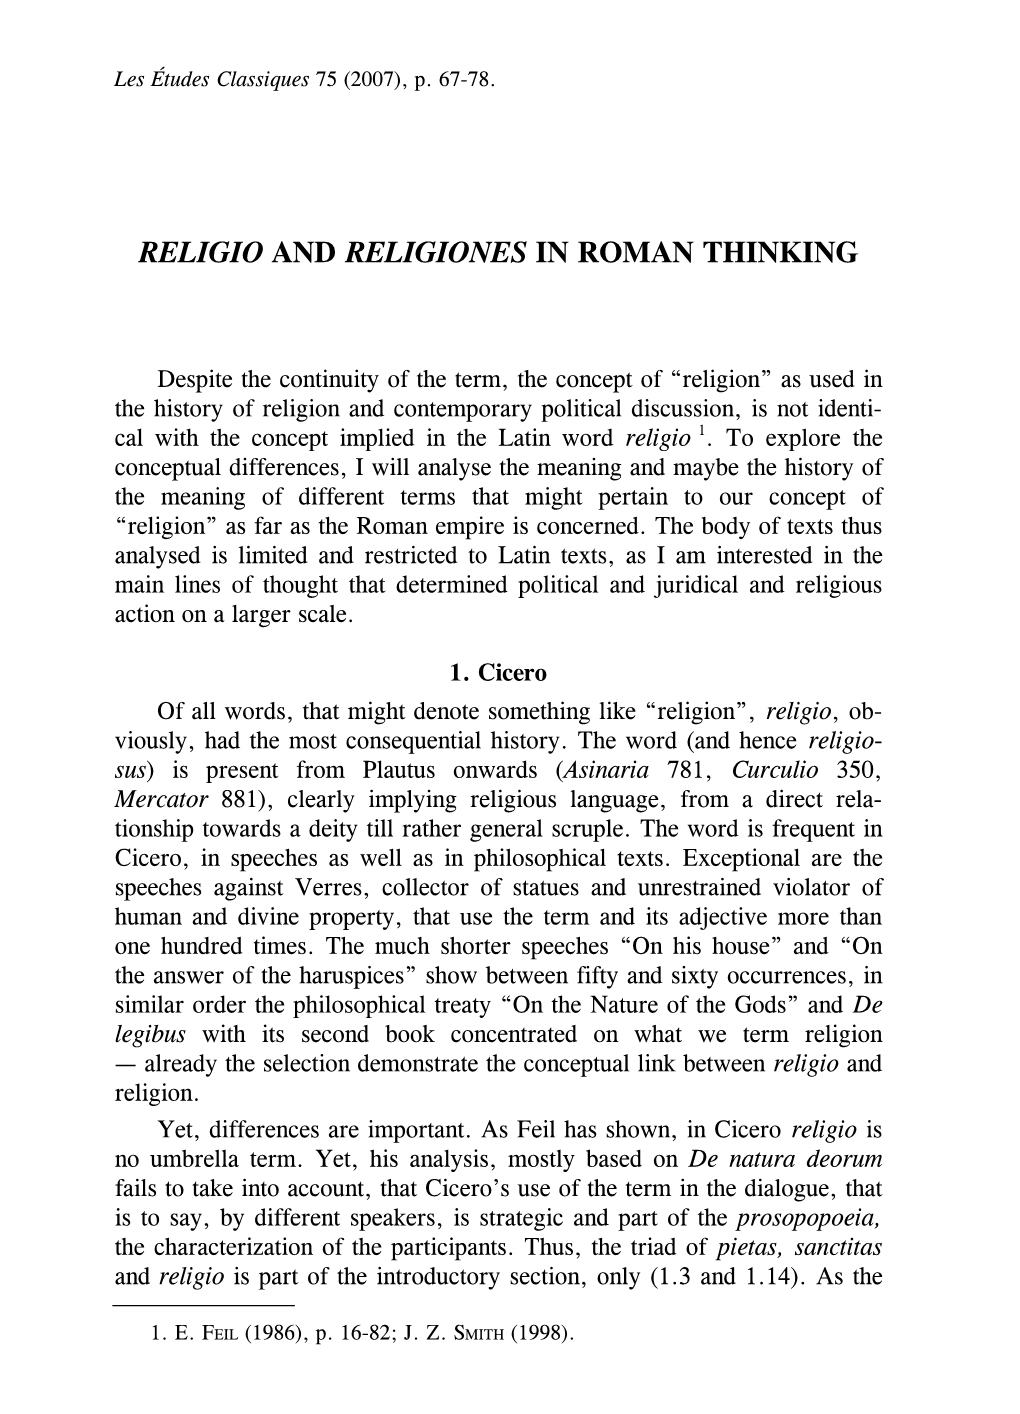 Religio and Religiones in Roman Thinking